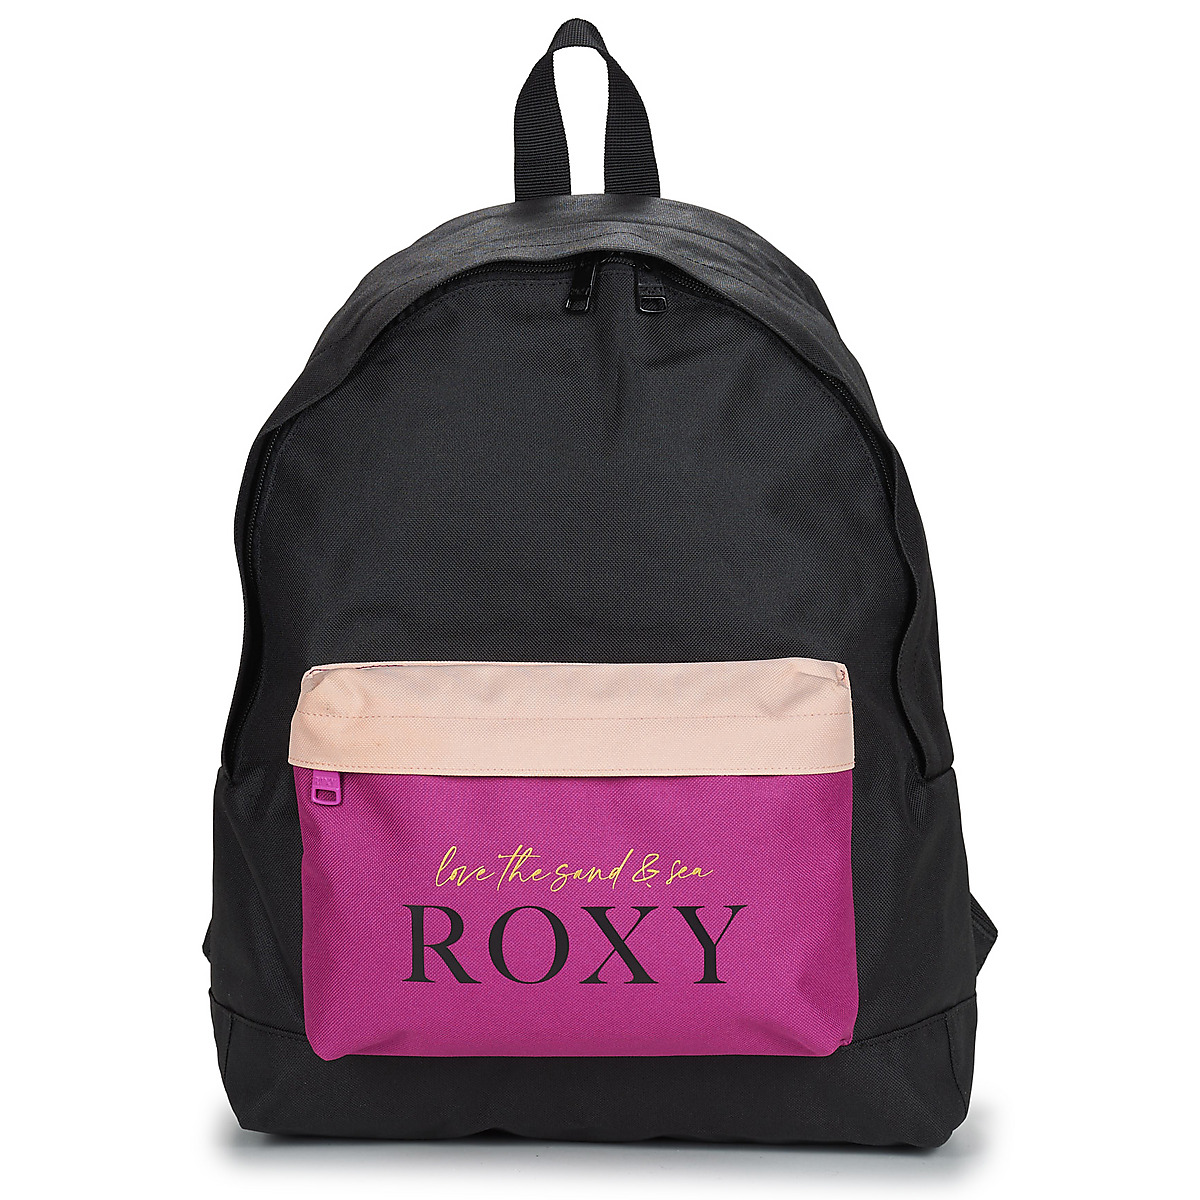 Roxy Noir / Rose CLASSIC SPIRIT rTrbrdEp